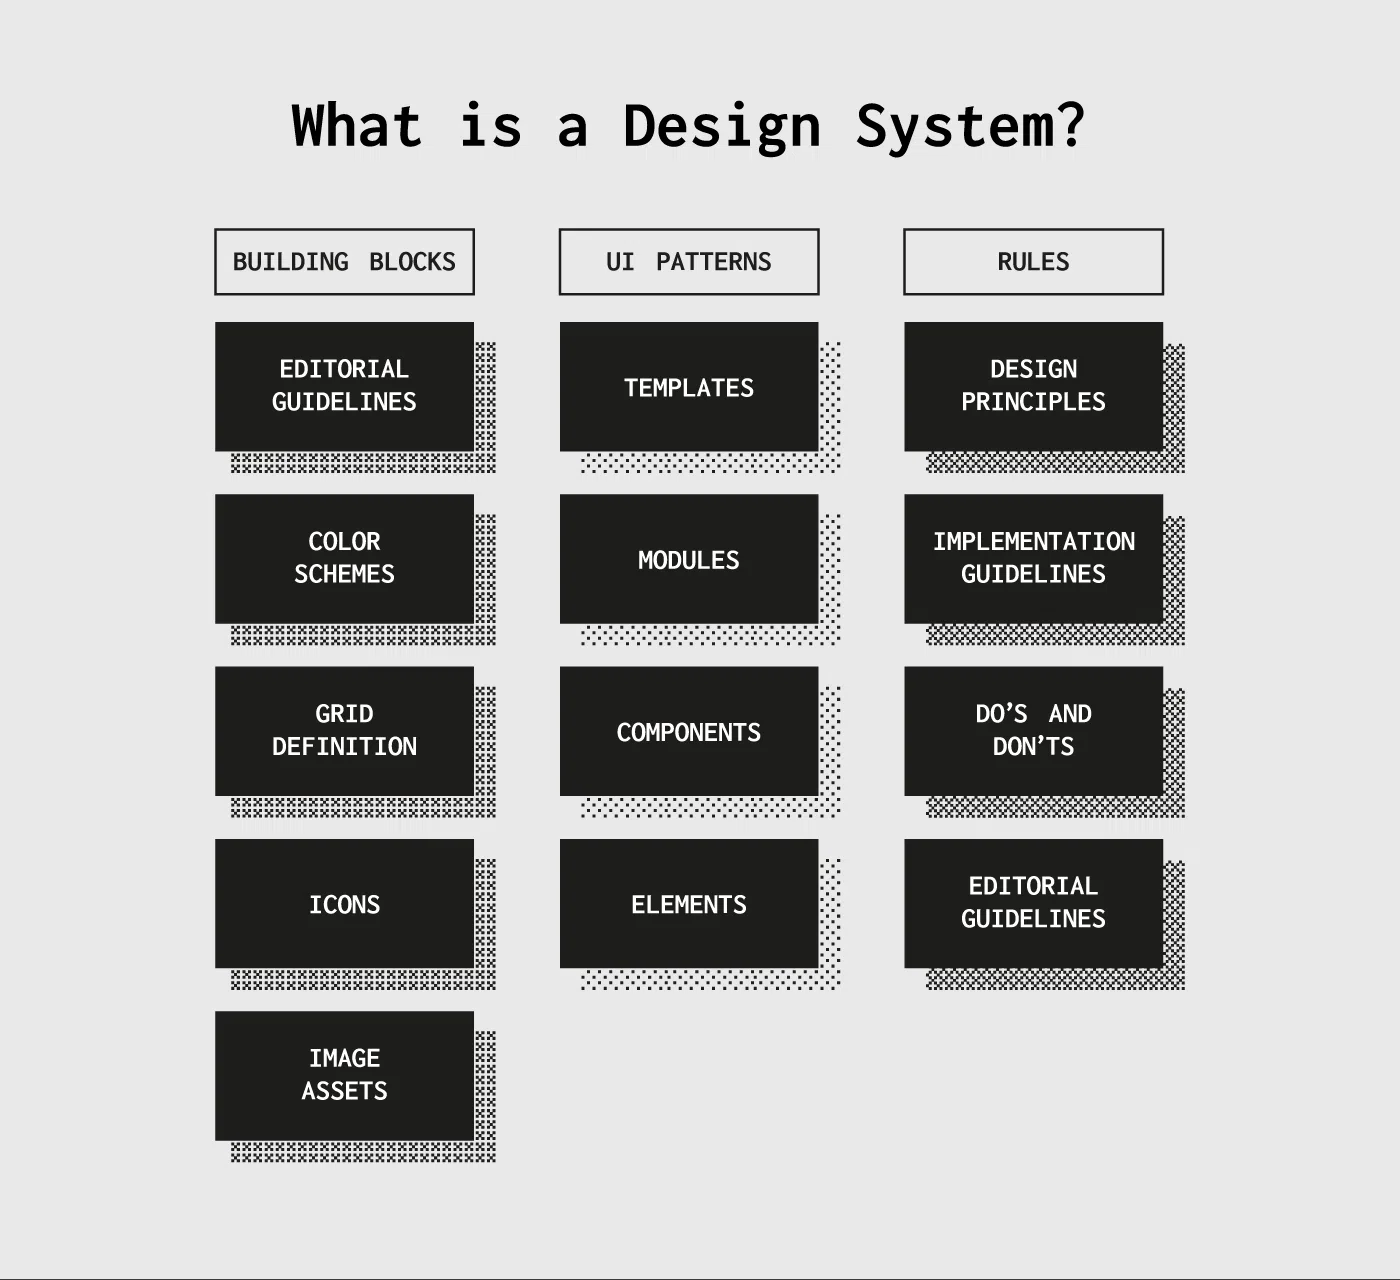 Design system components
